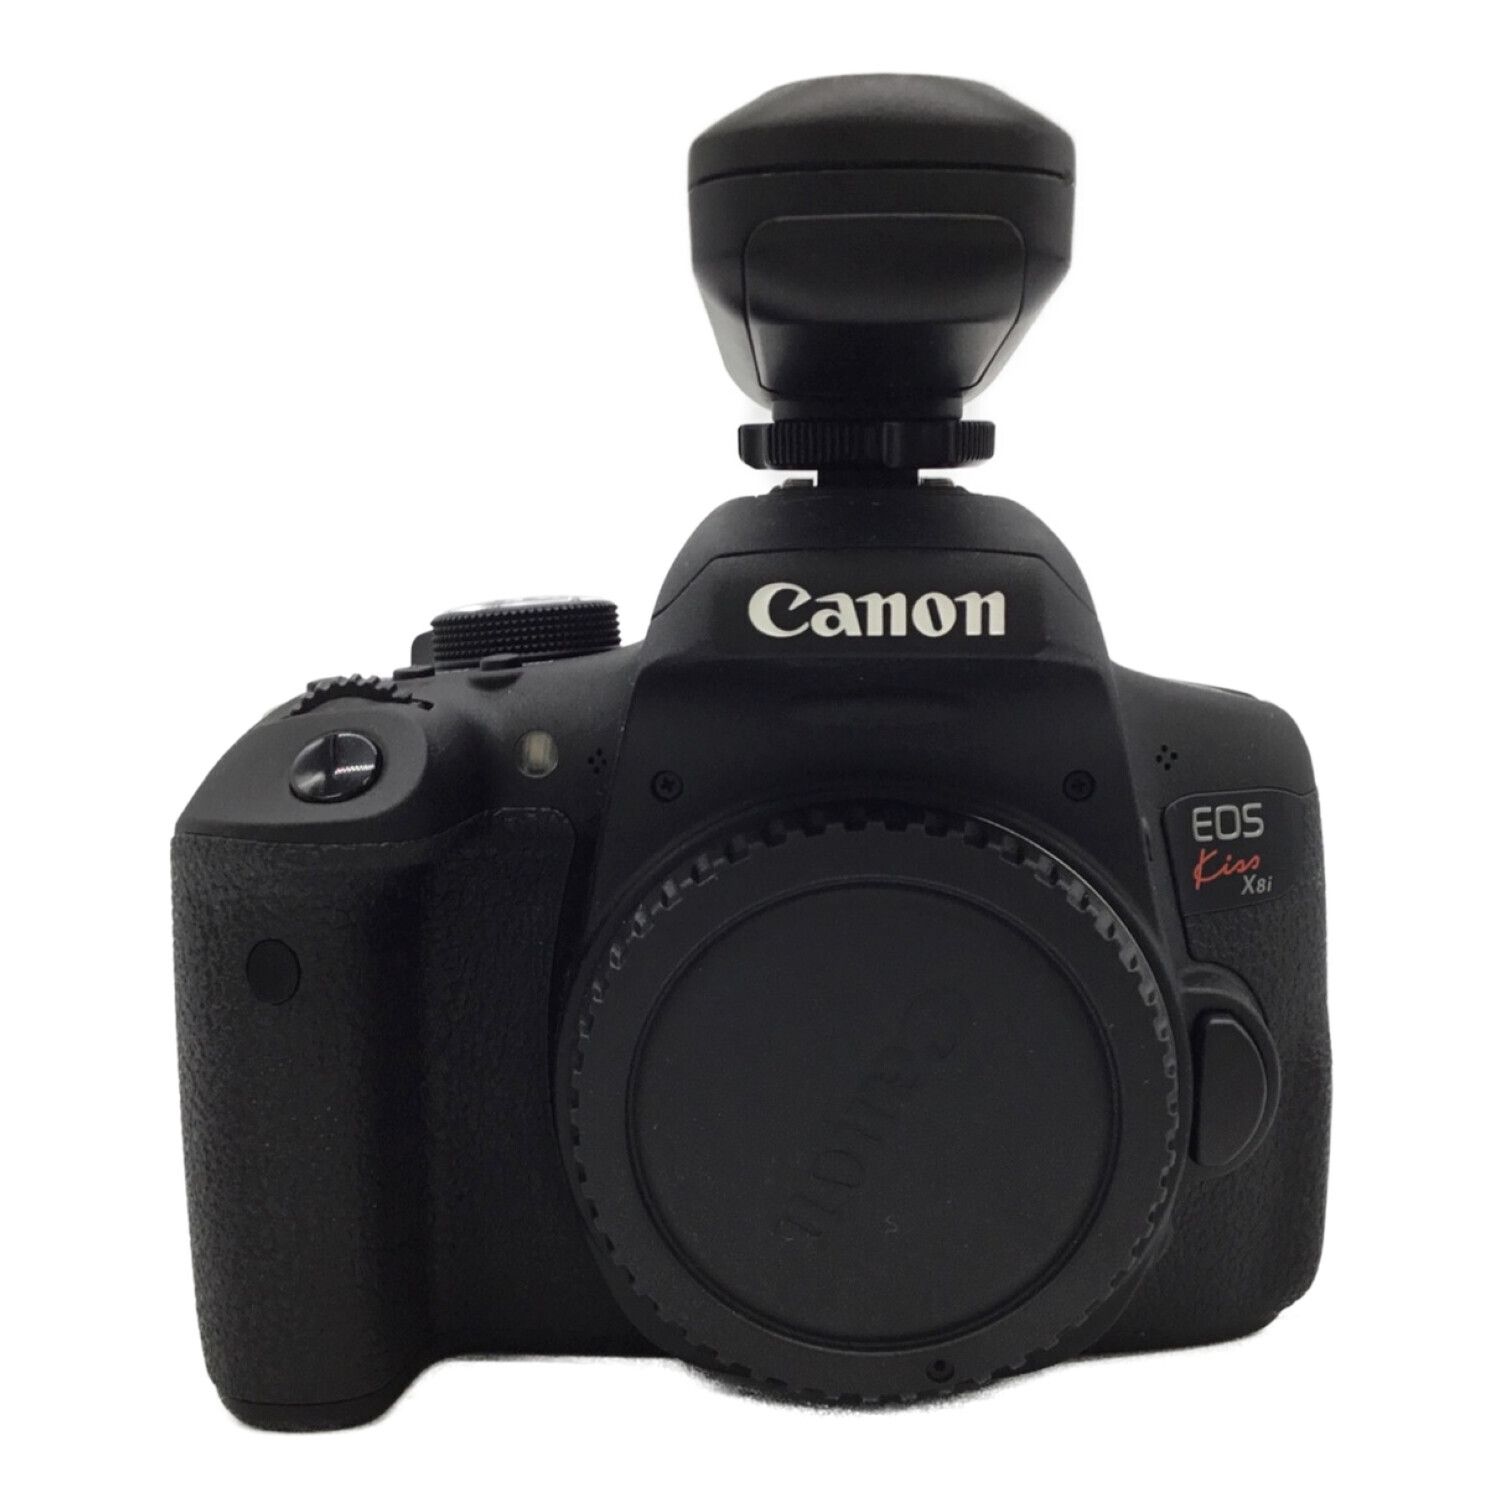 CANON (キャノン) デジタル一眼レフカメラ EOS KISS X8i 2420万画素 ...